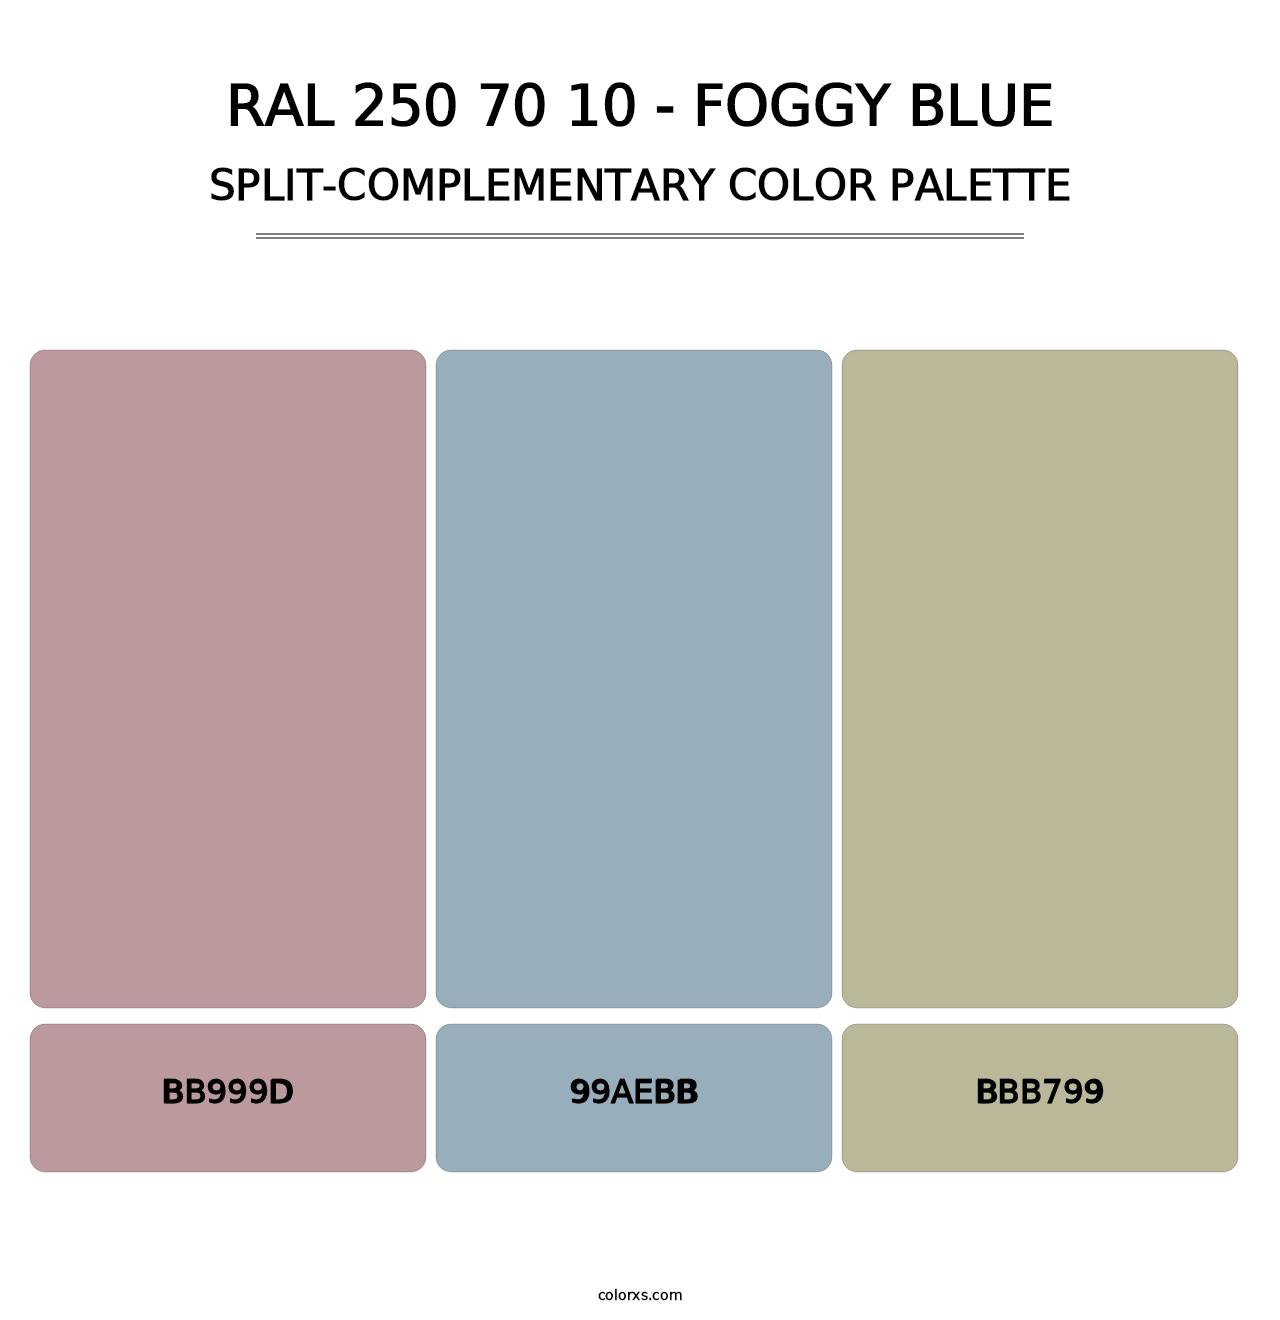 RAL 250 70 10 - Foggy Blue - Split-Complementary Color Palette